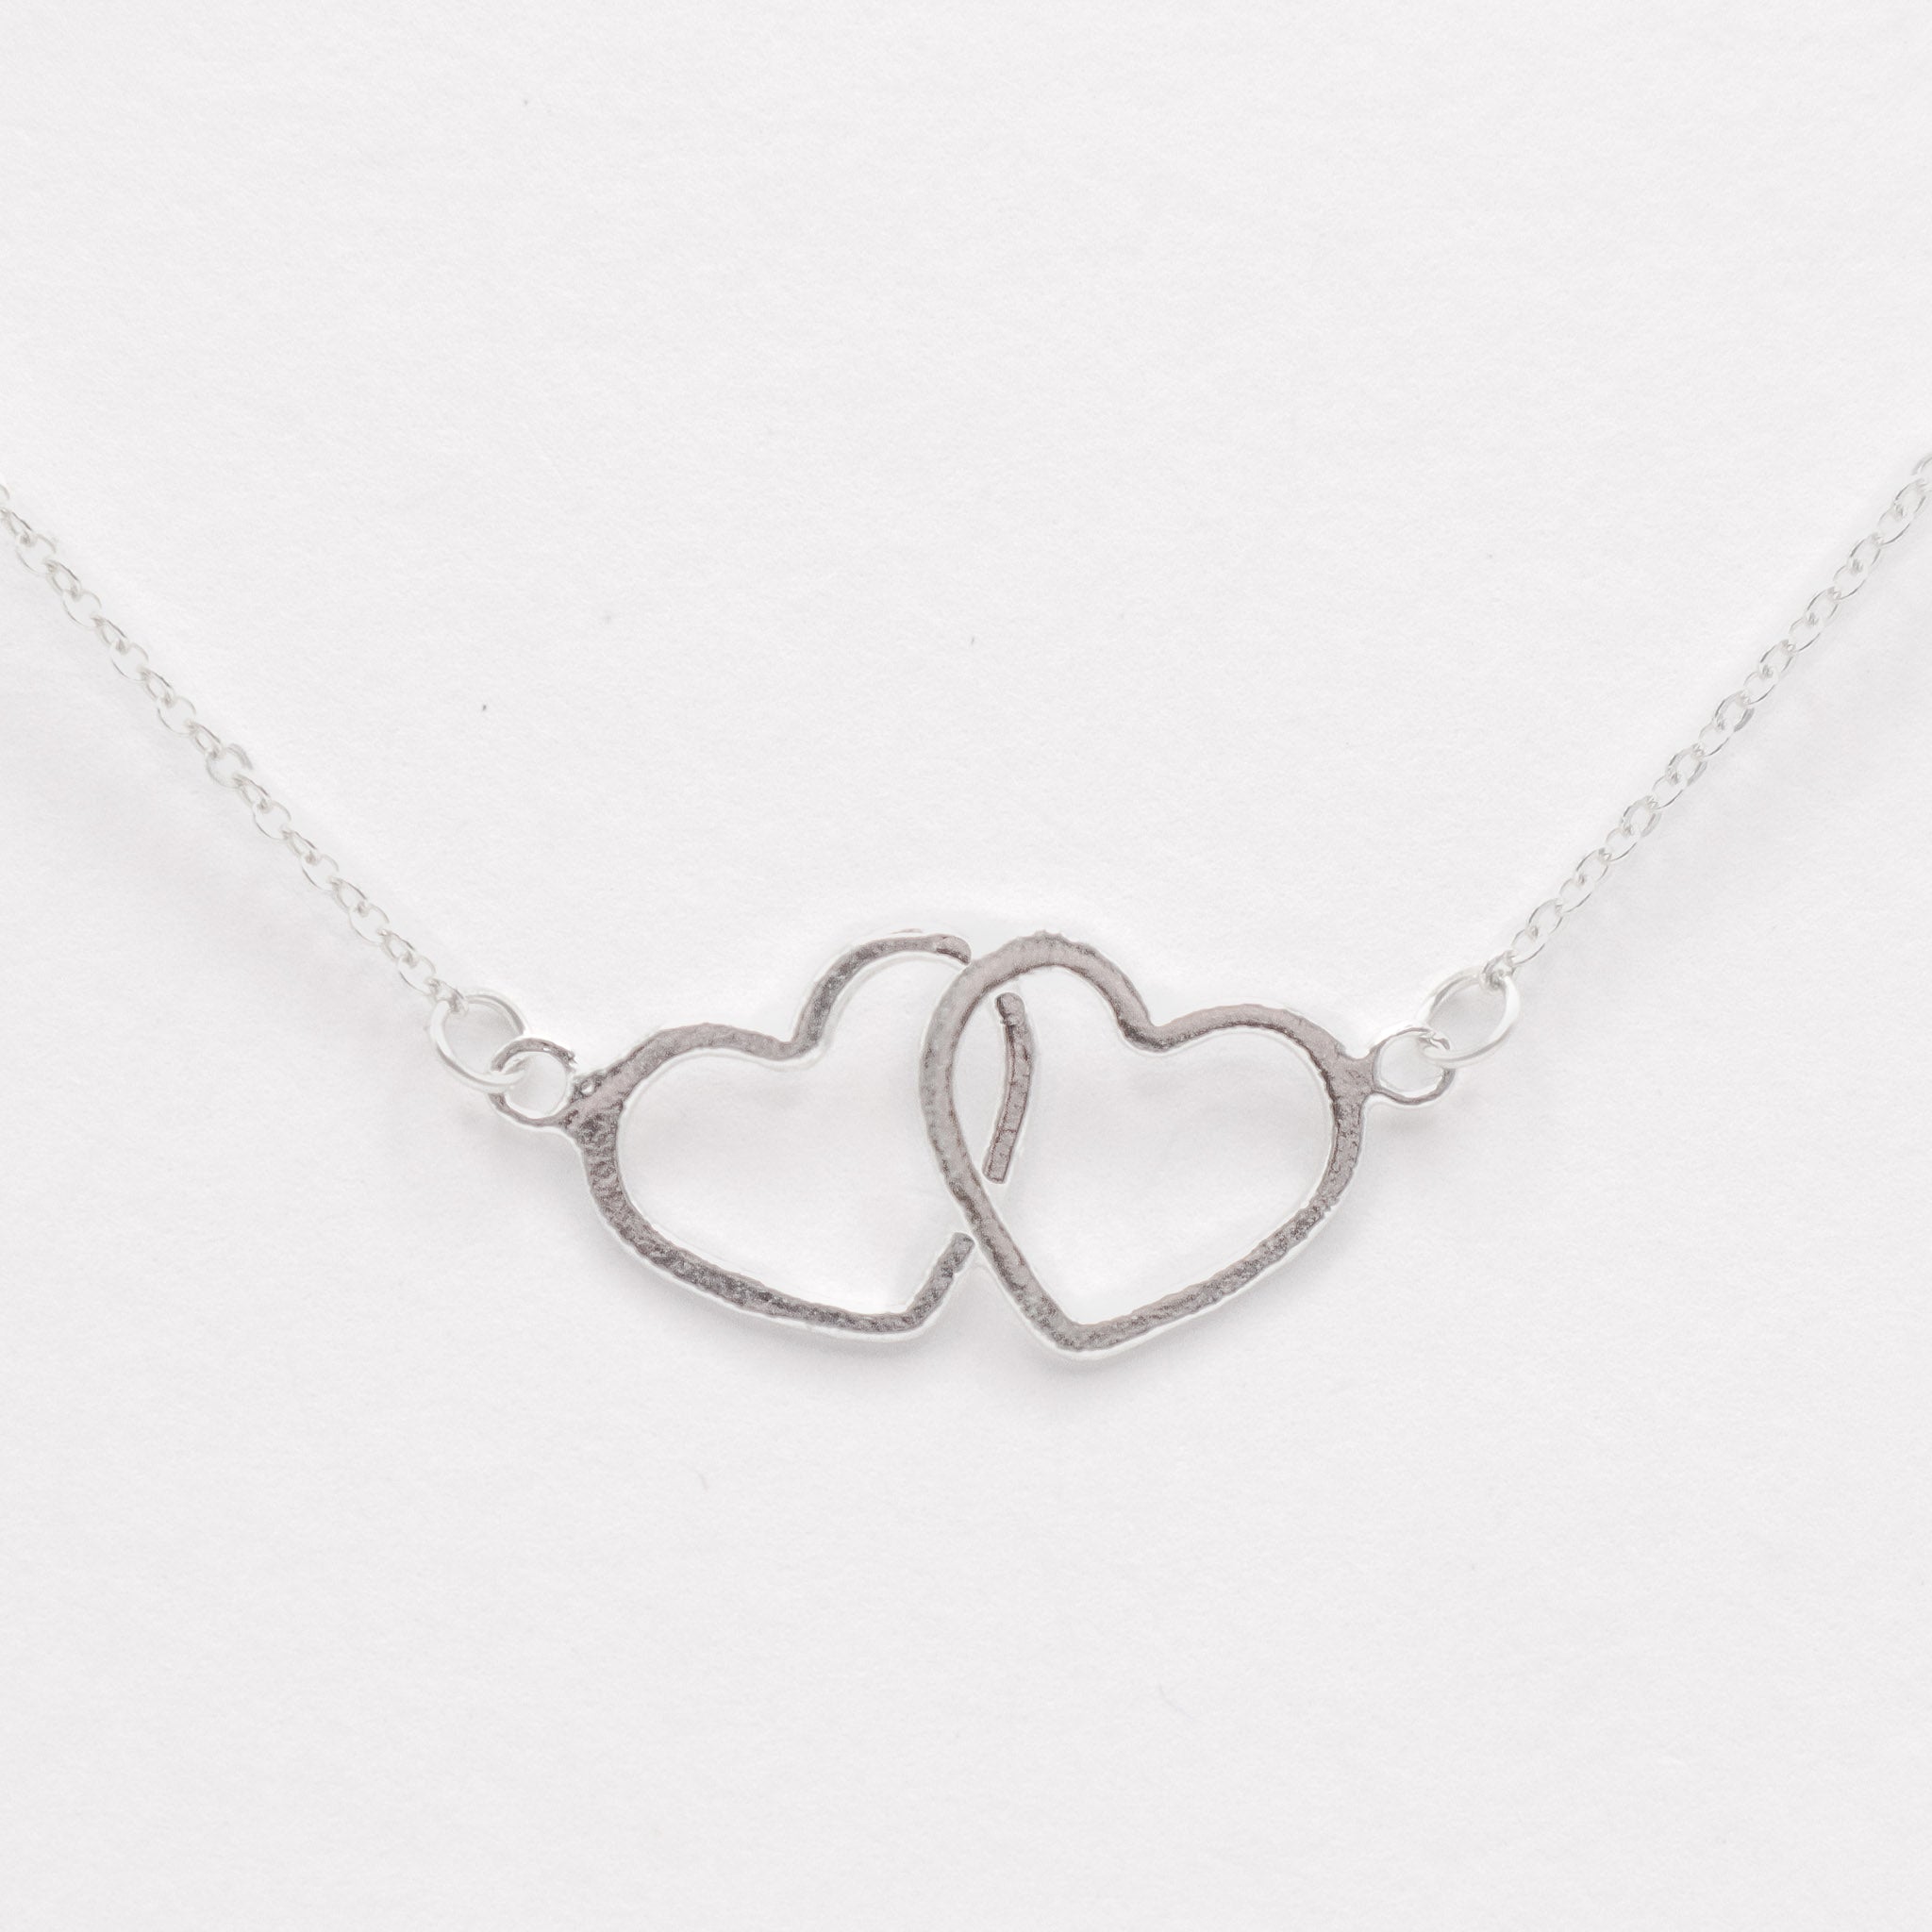 Silver Friendship Necklace, closeup image